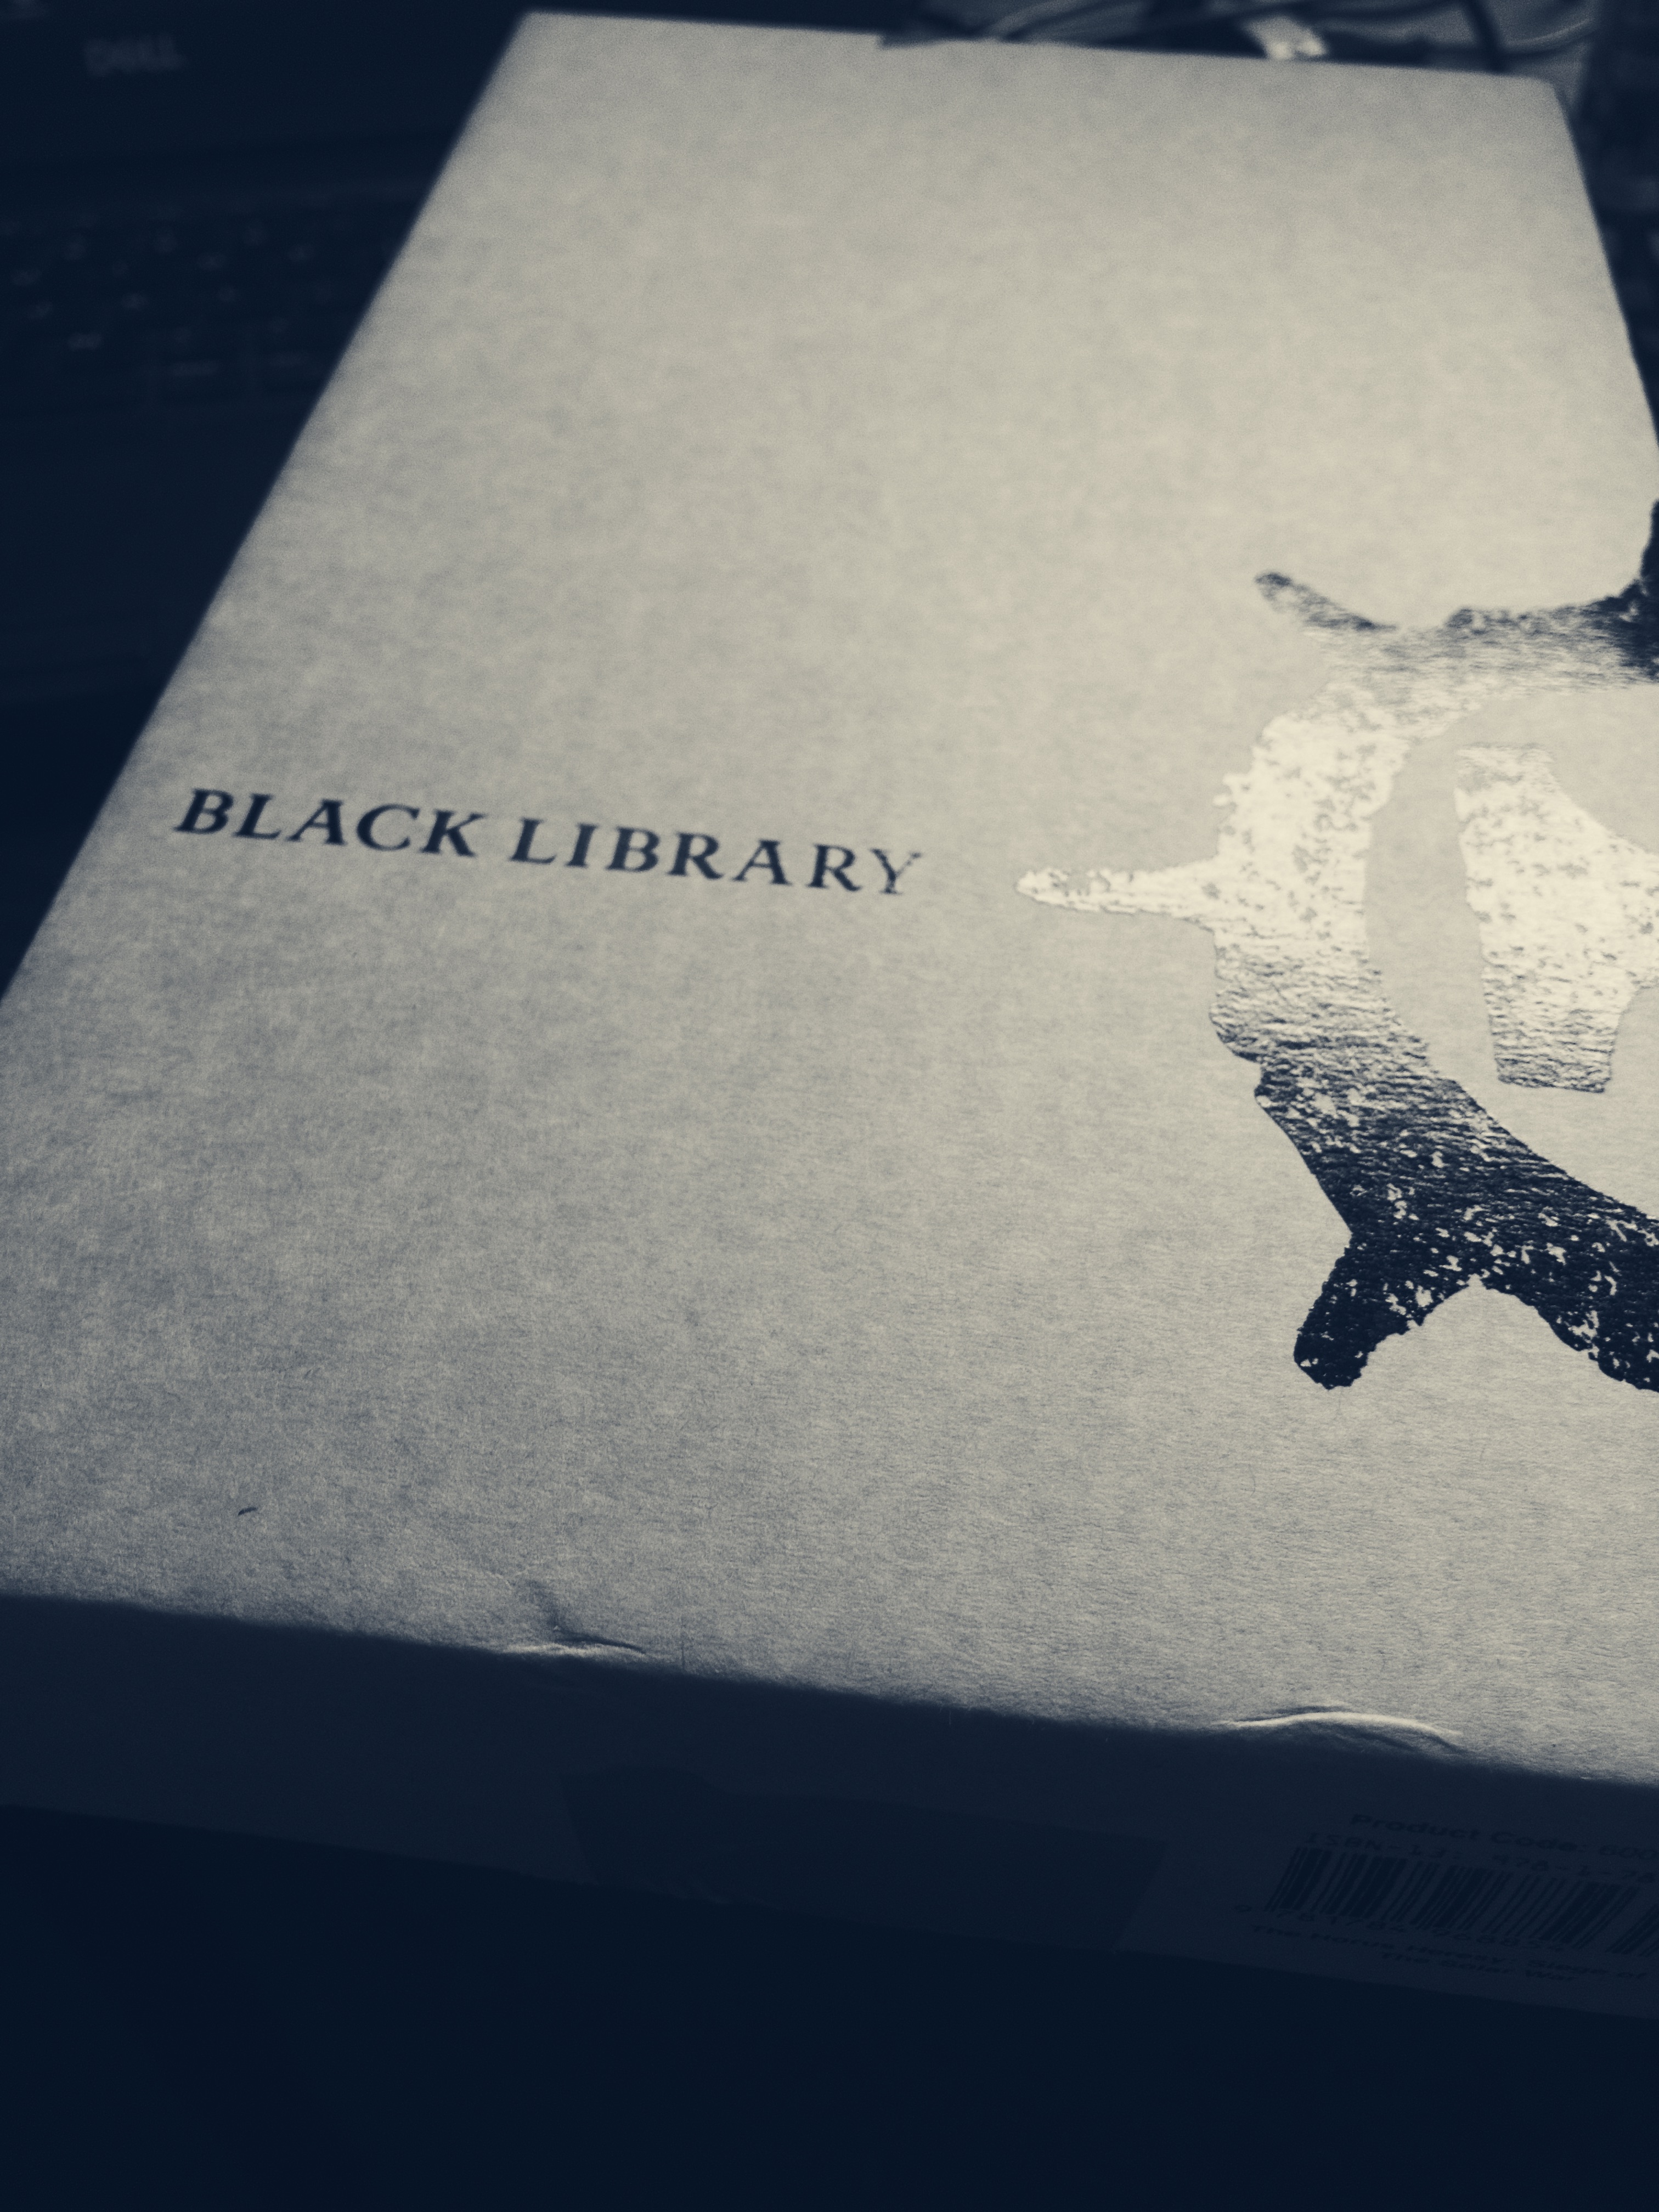 Black Library packaging